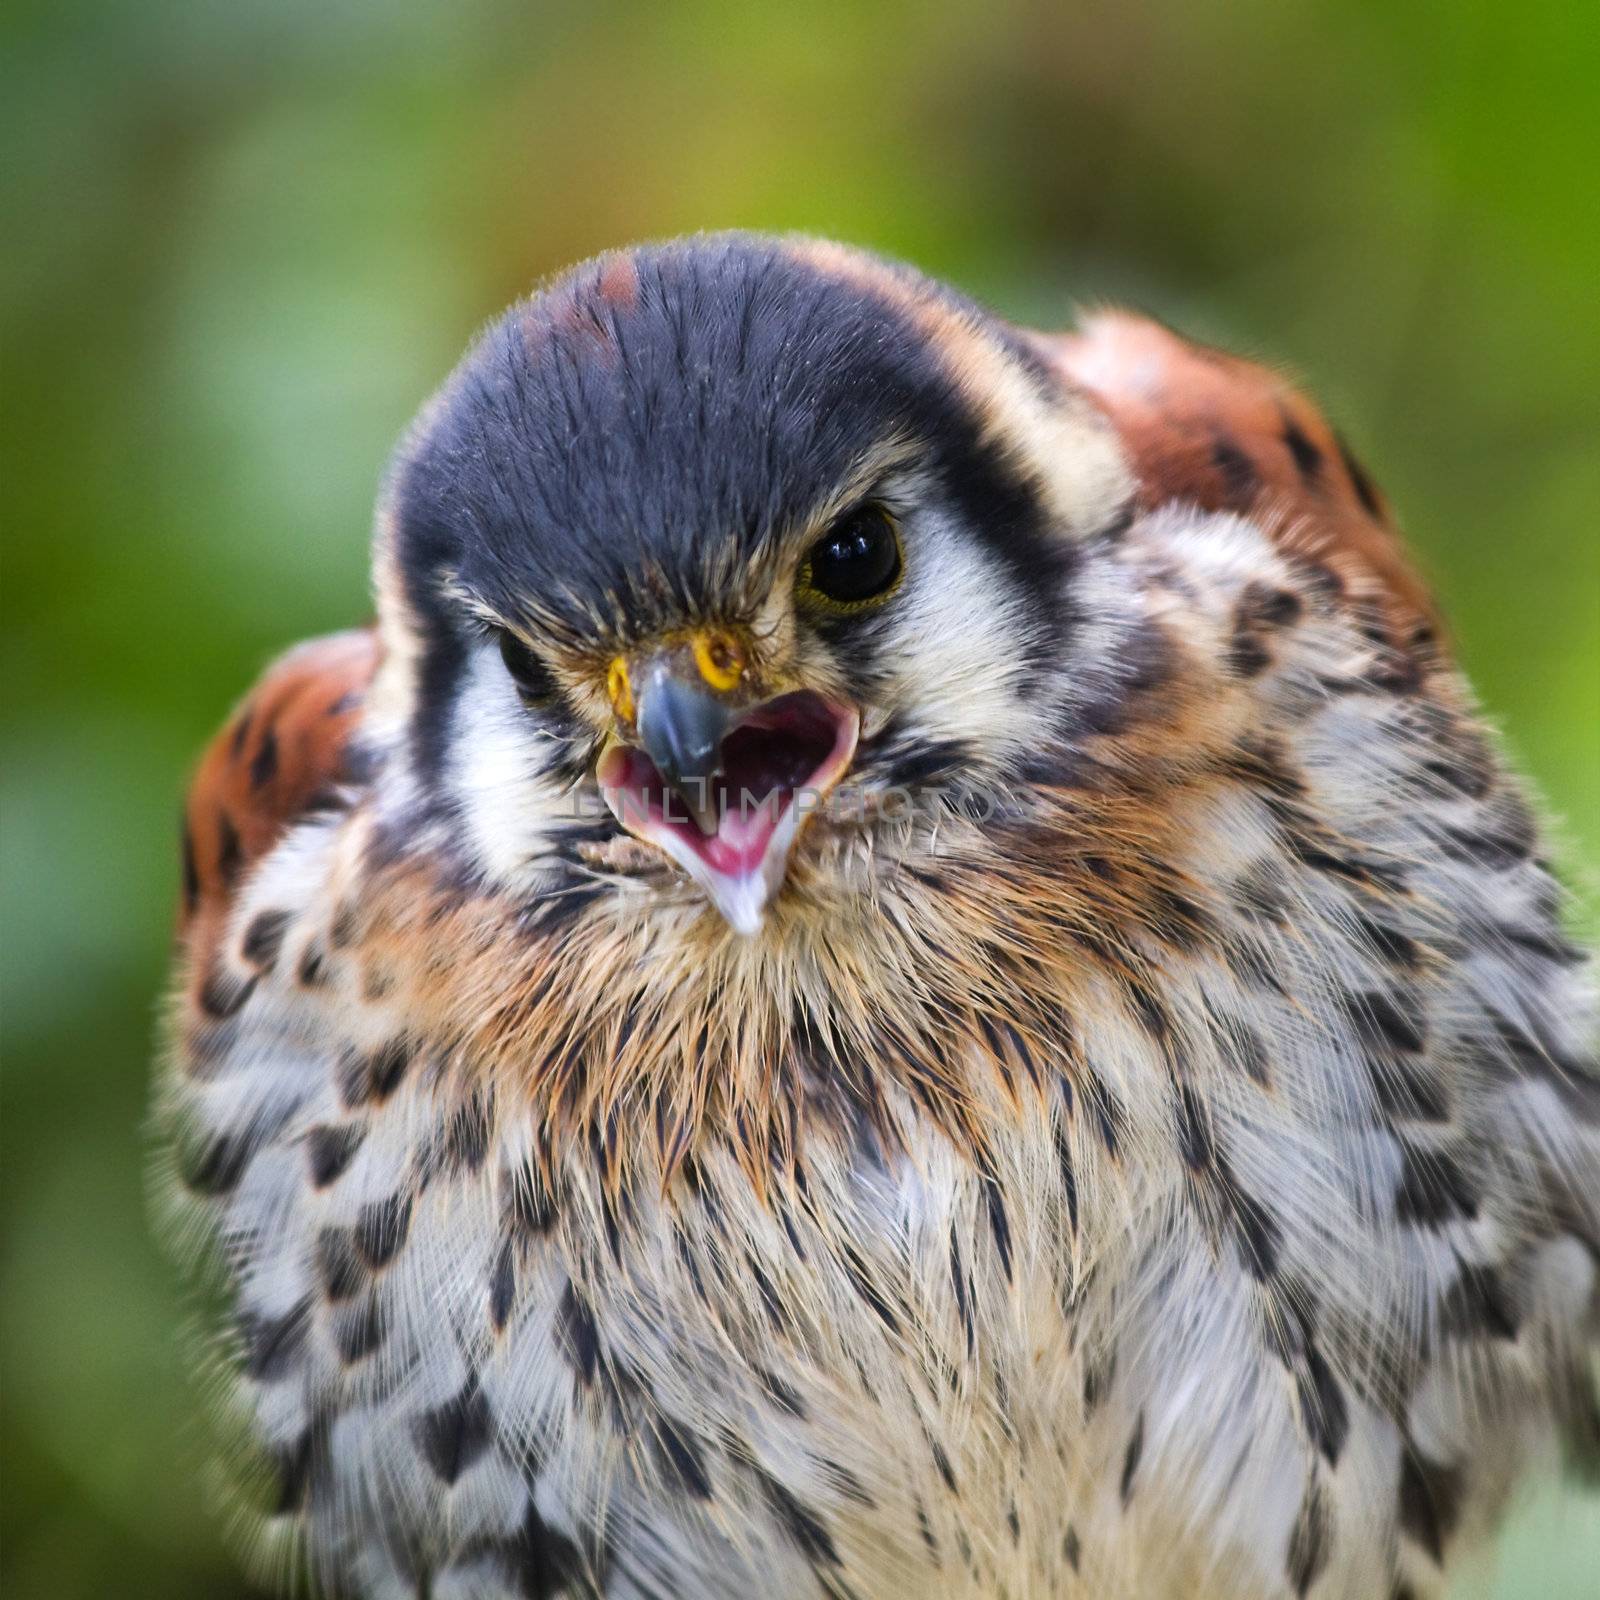 American kestrel or Sparrow hawk screaming - square image